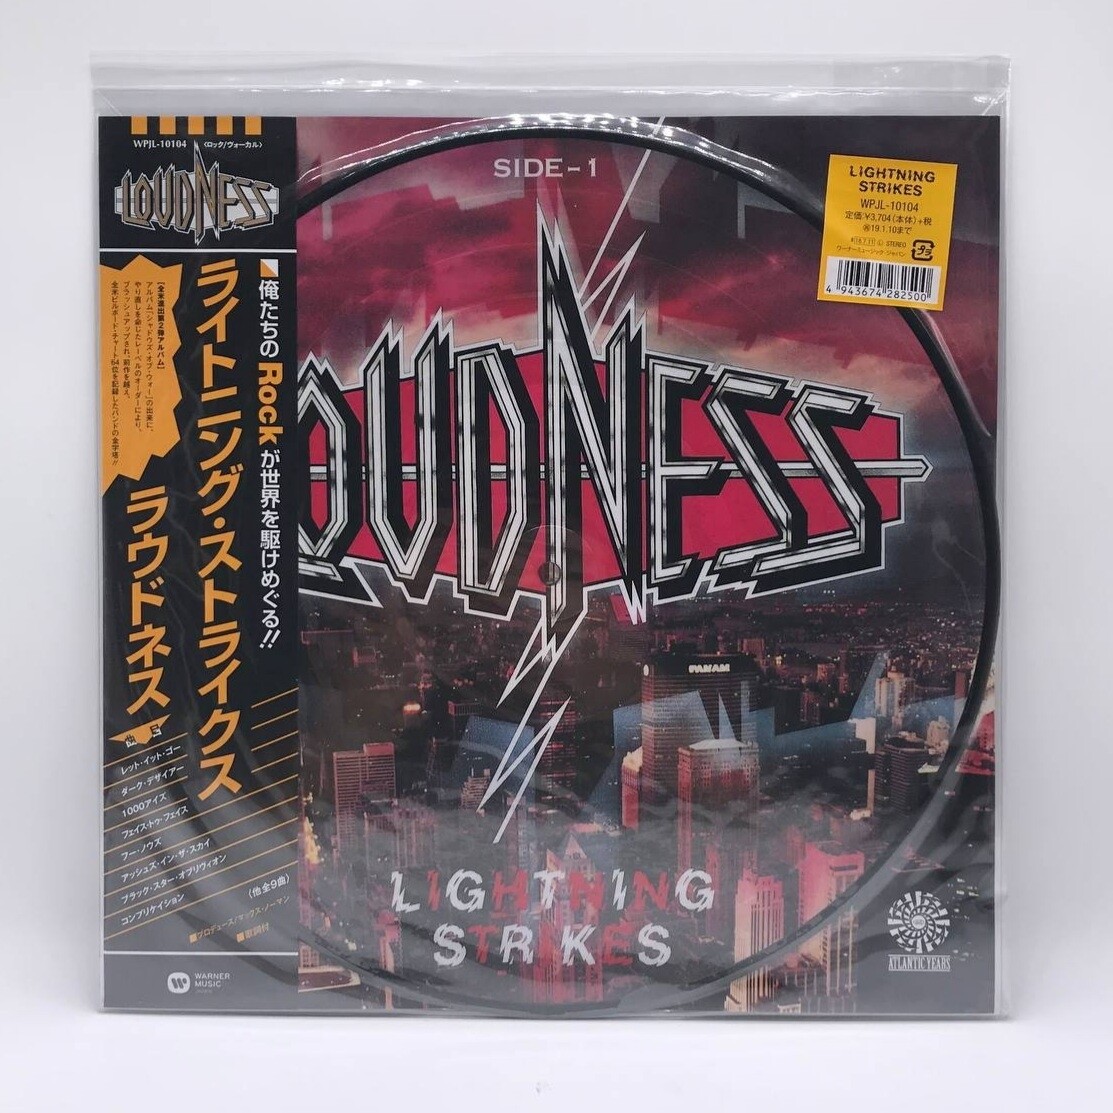 [USED] LOUDNESS -LIGHTHING STRIKE- PICDISC LP (JAPAN PRESS)